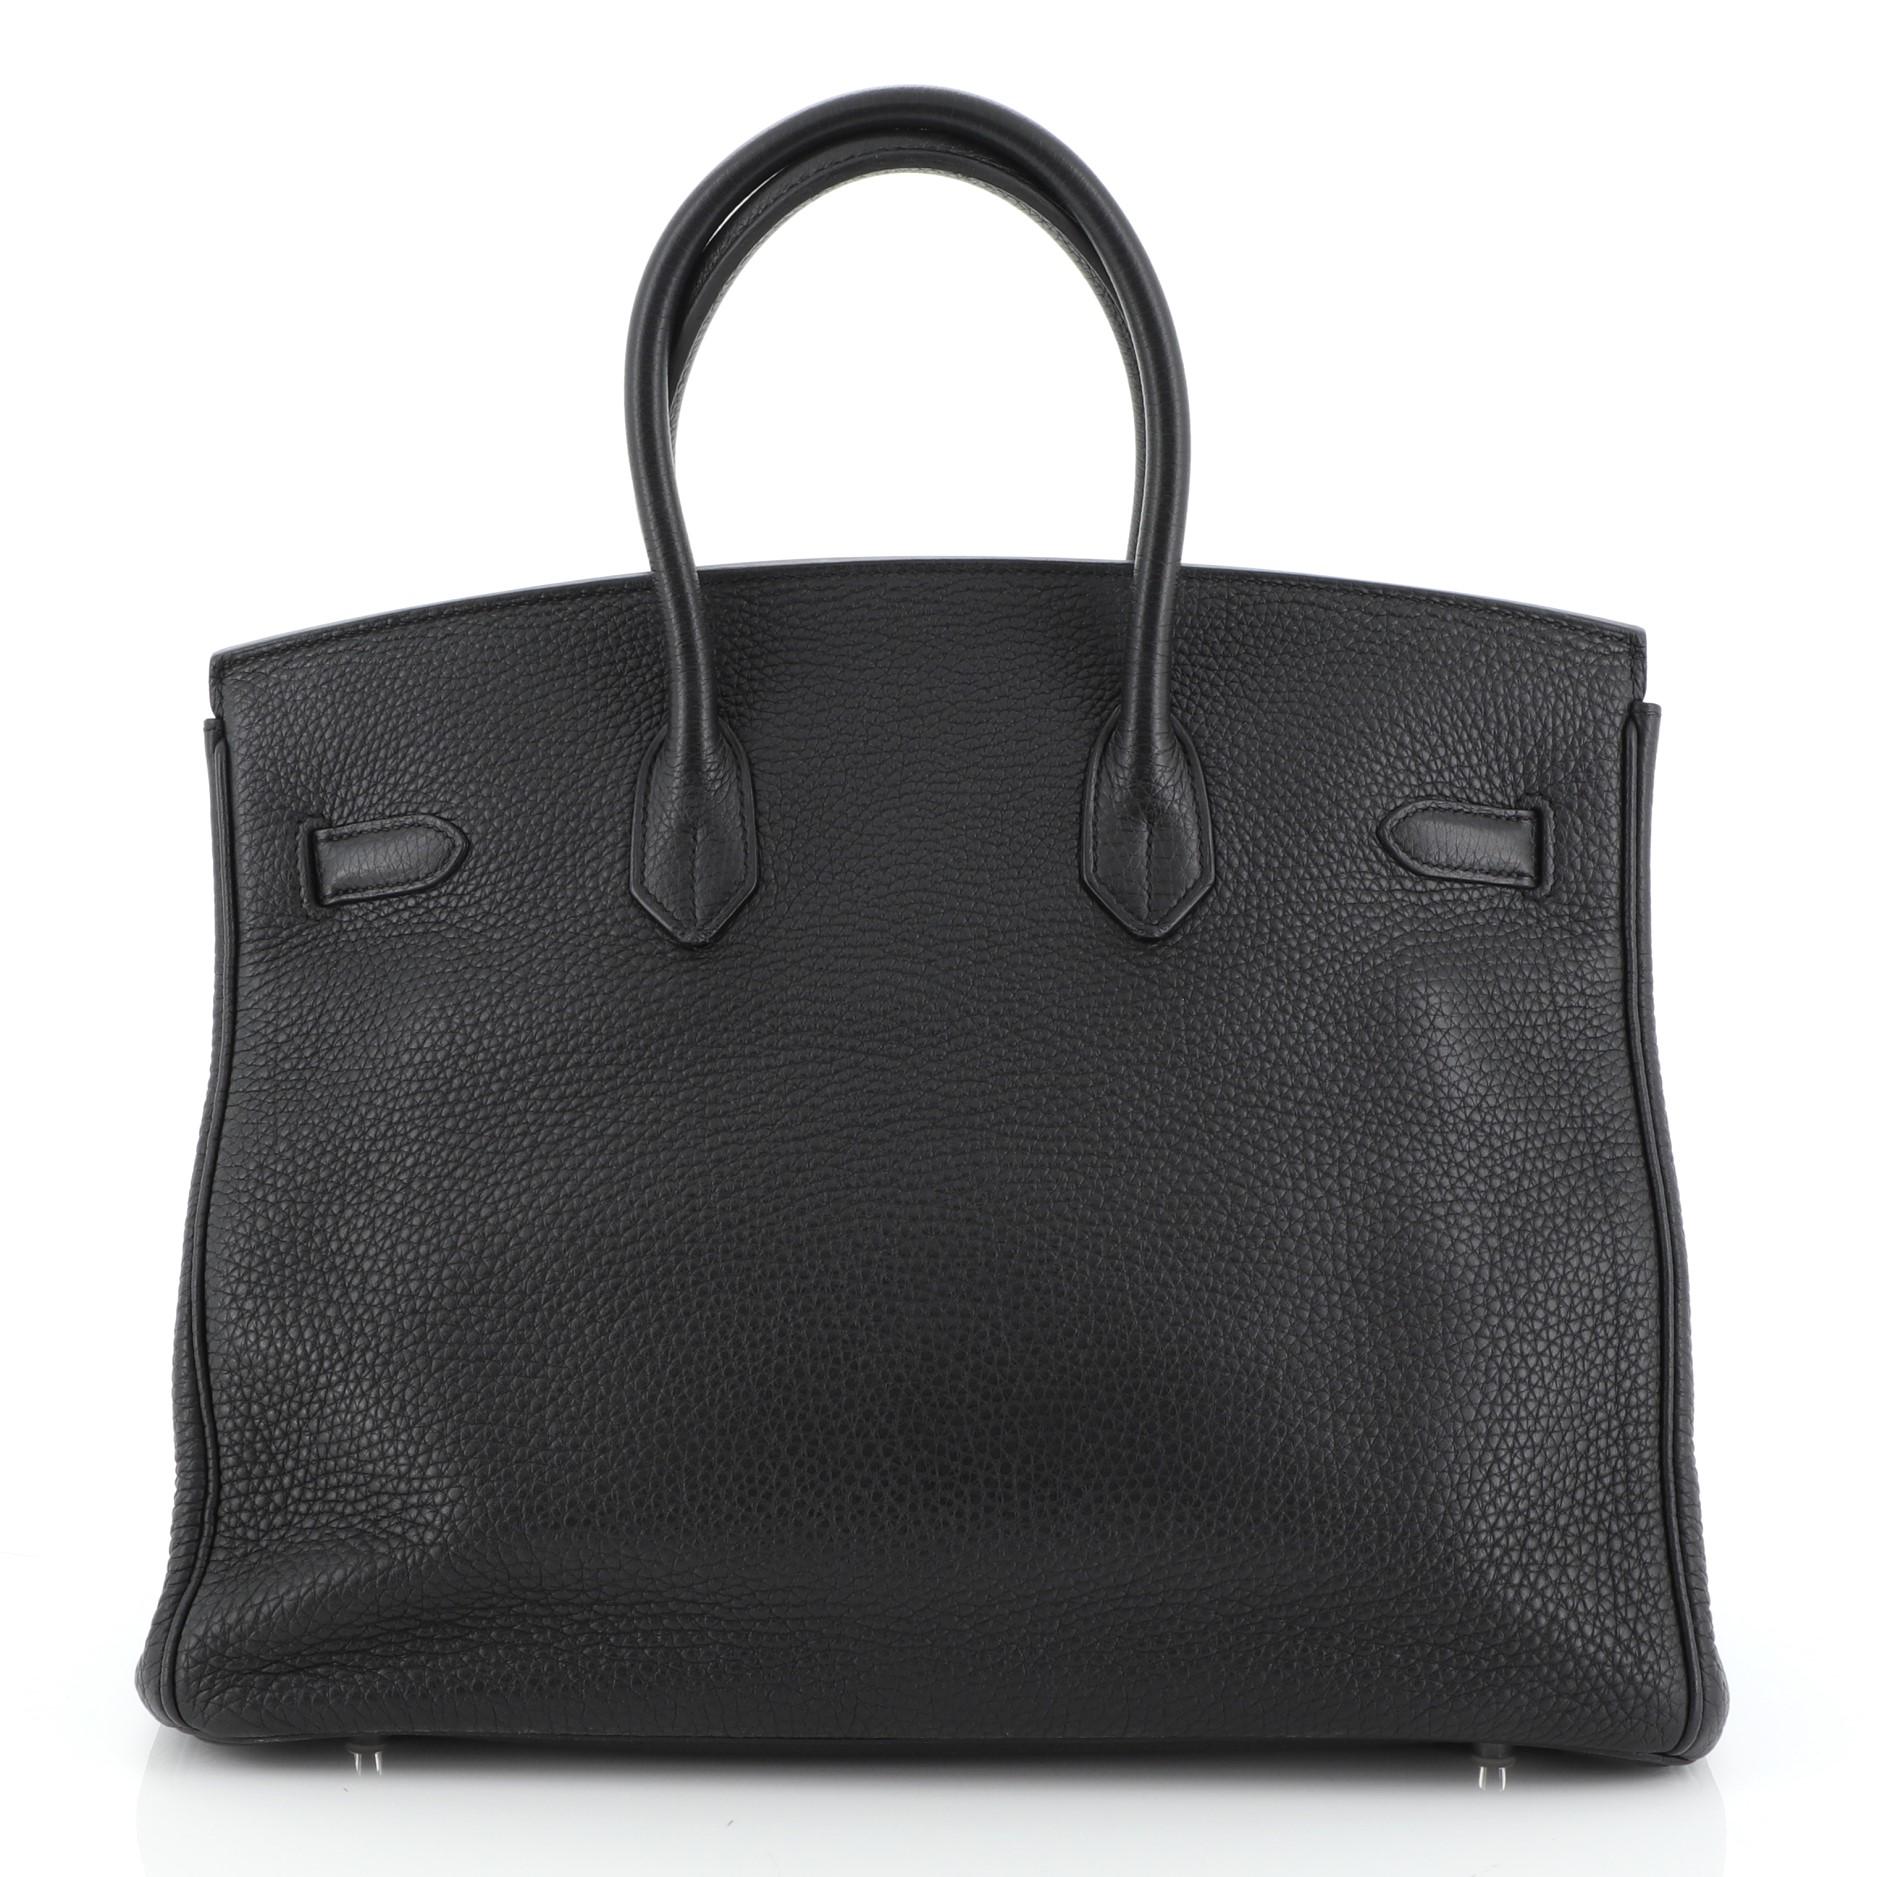 Black Hermes Birkin Handbag Noir Togo with Palladium Hardware 35